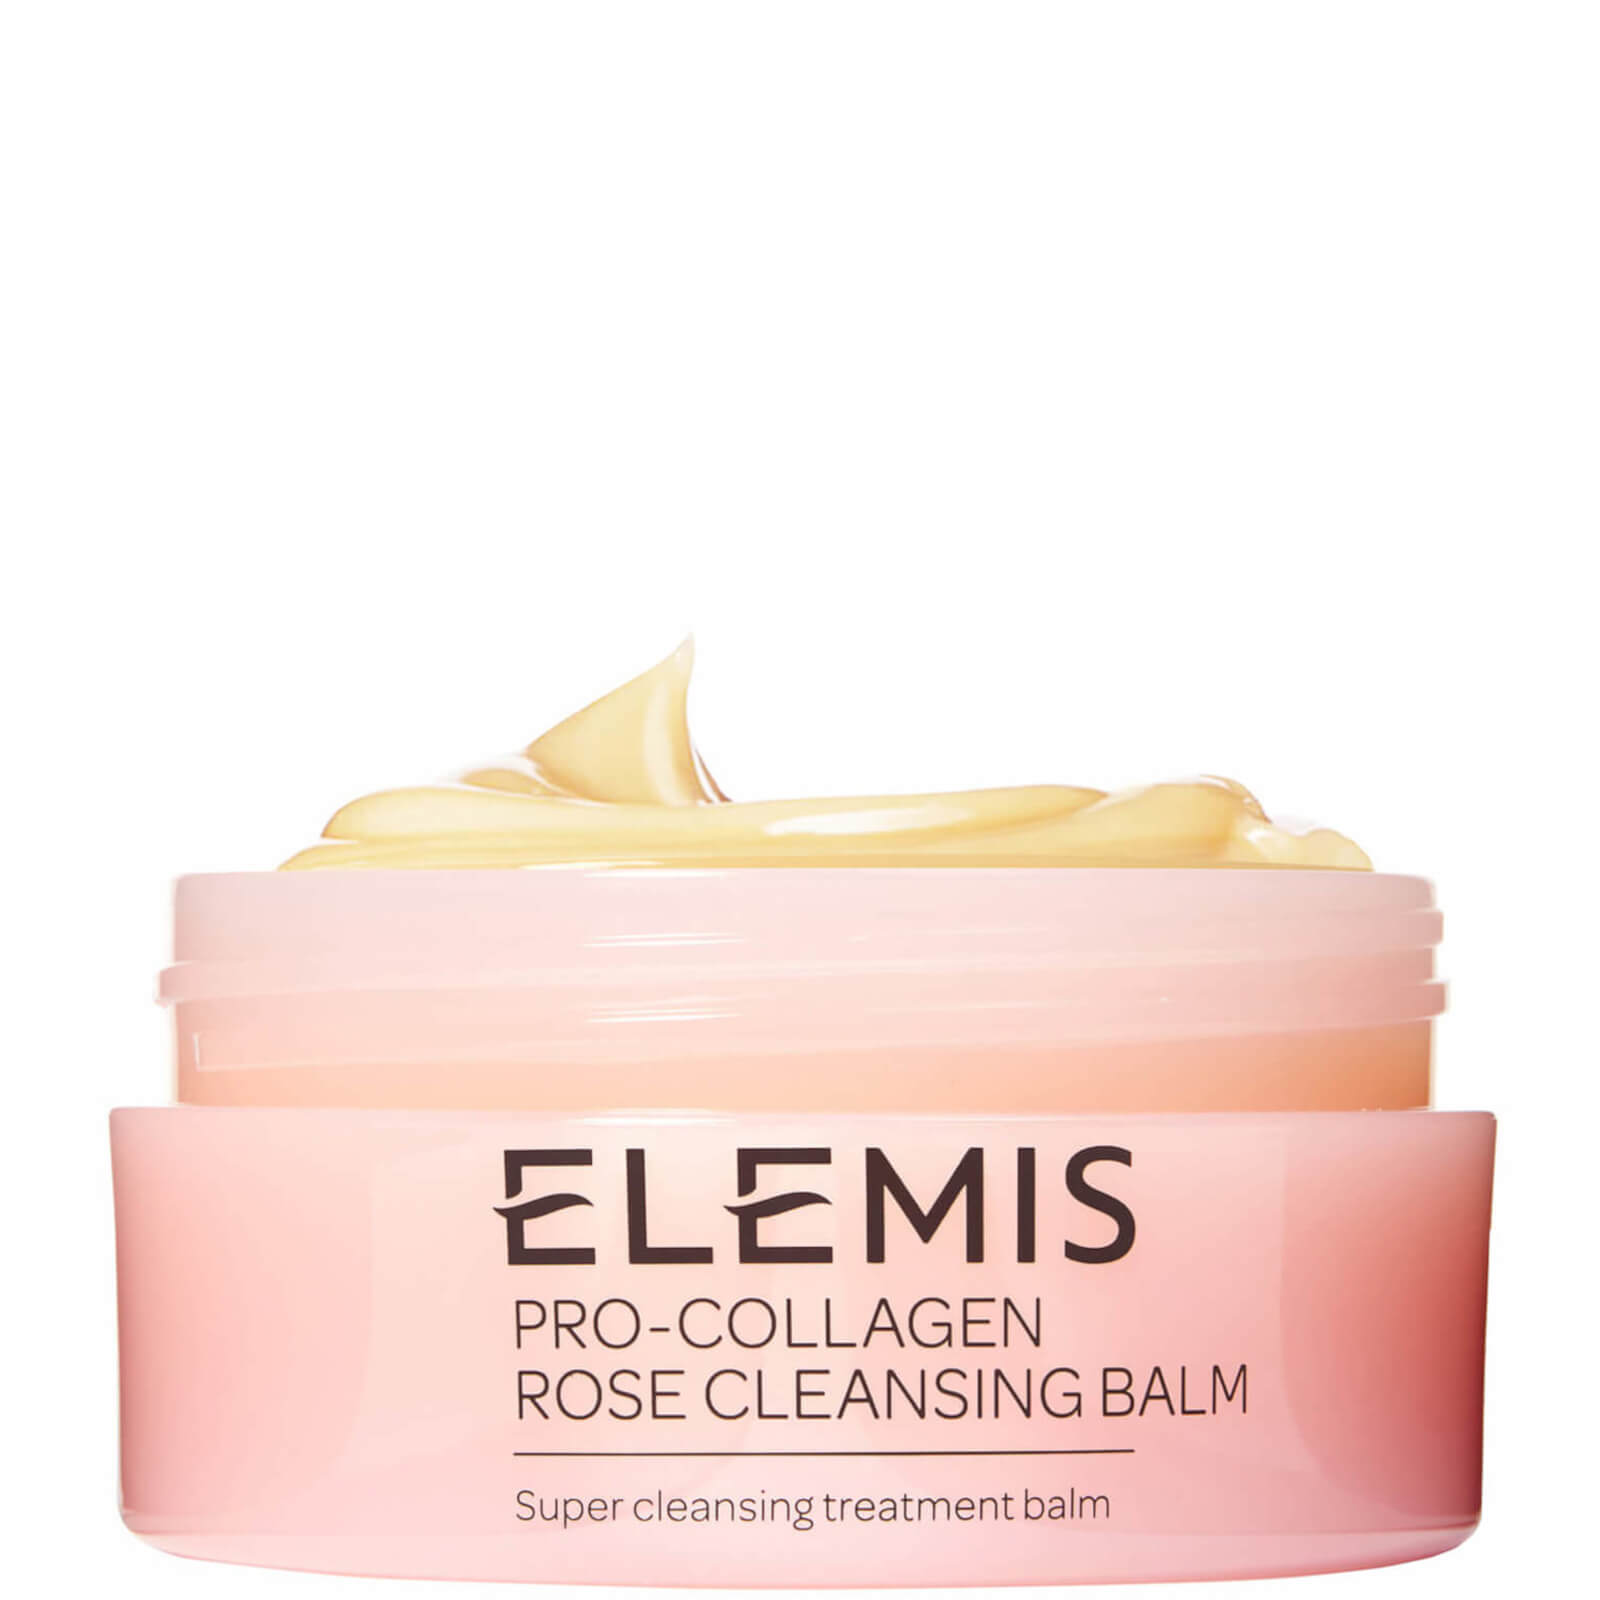 Pro-Collagen Rose Cleansing Balm 100g